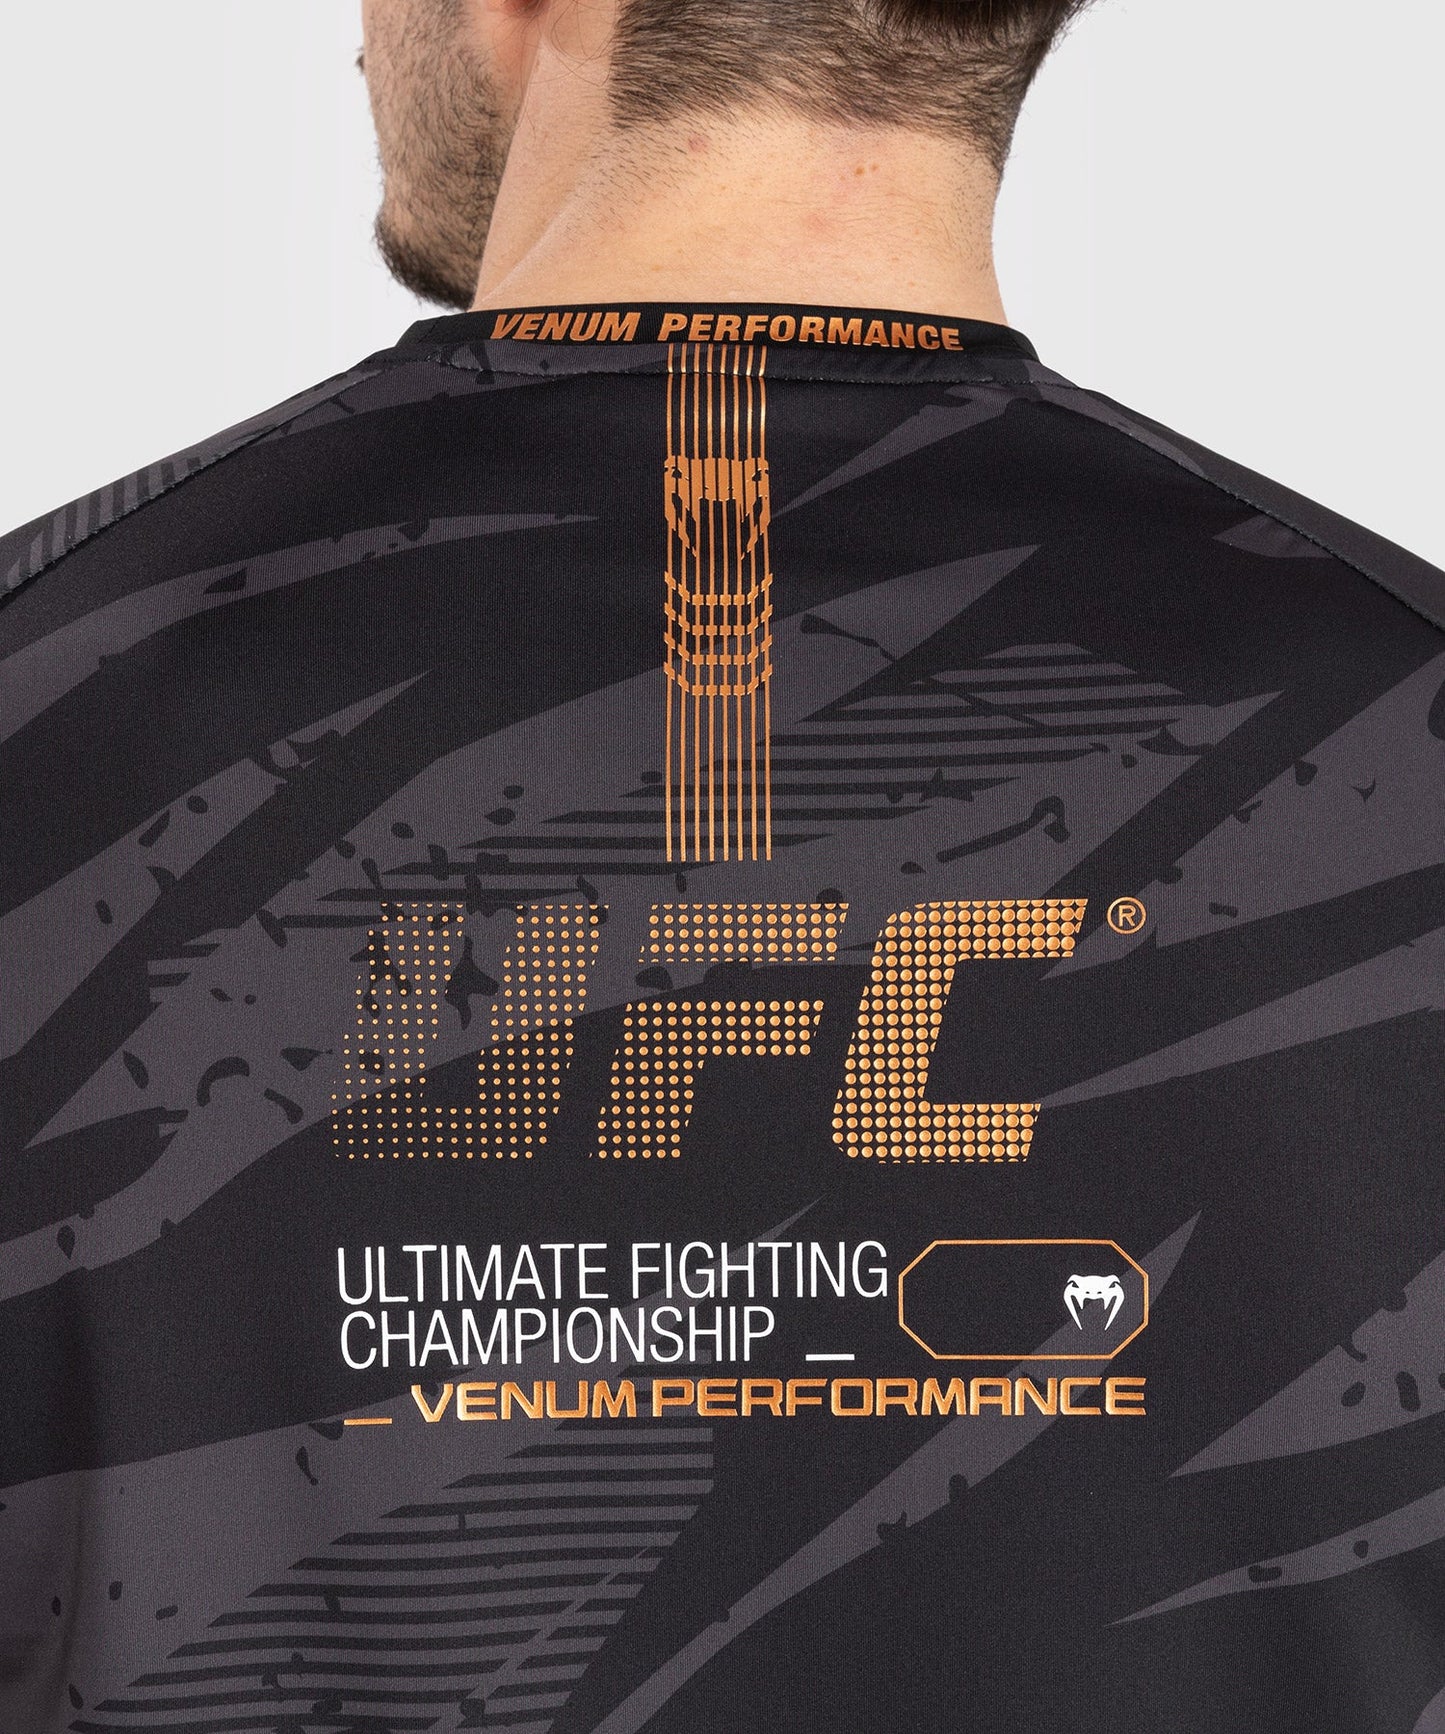 UFC Adrenaline by Venum Fight Week Herren Dry Tech T-Shirt - Urban Camo